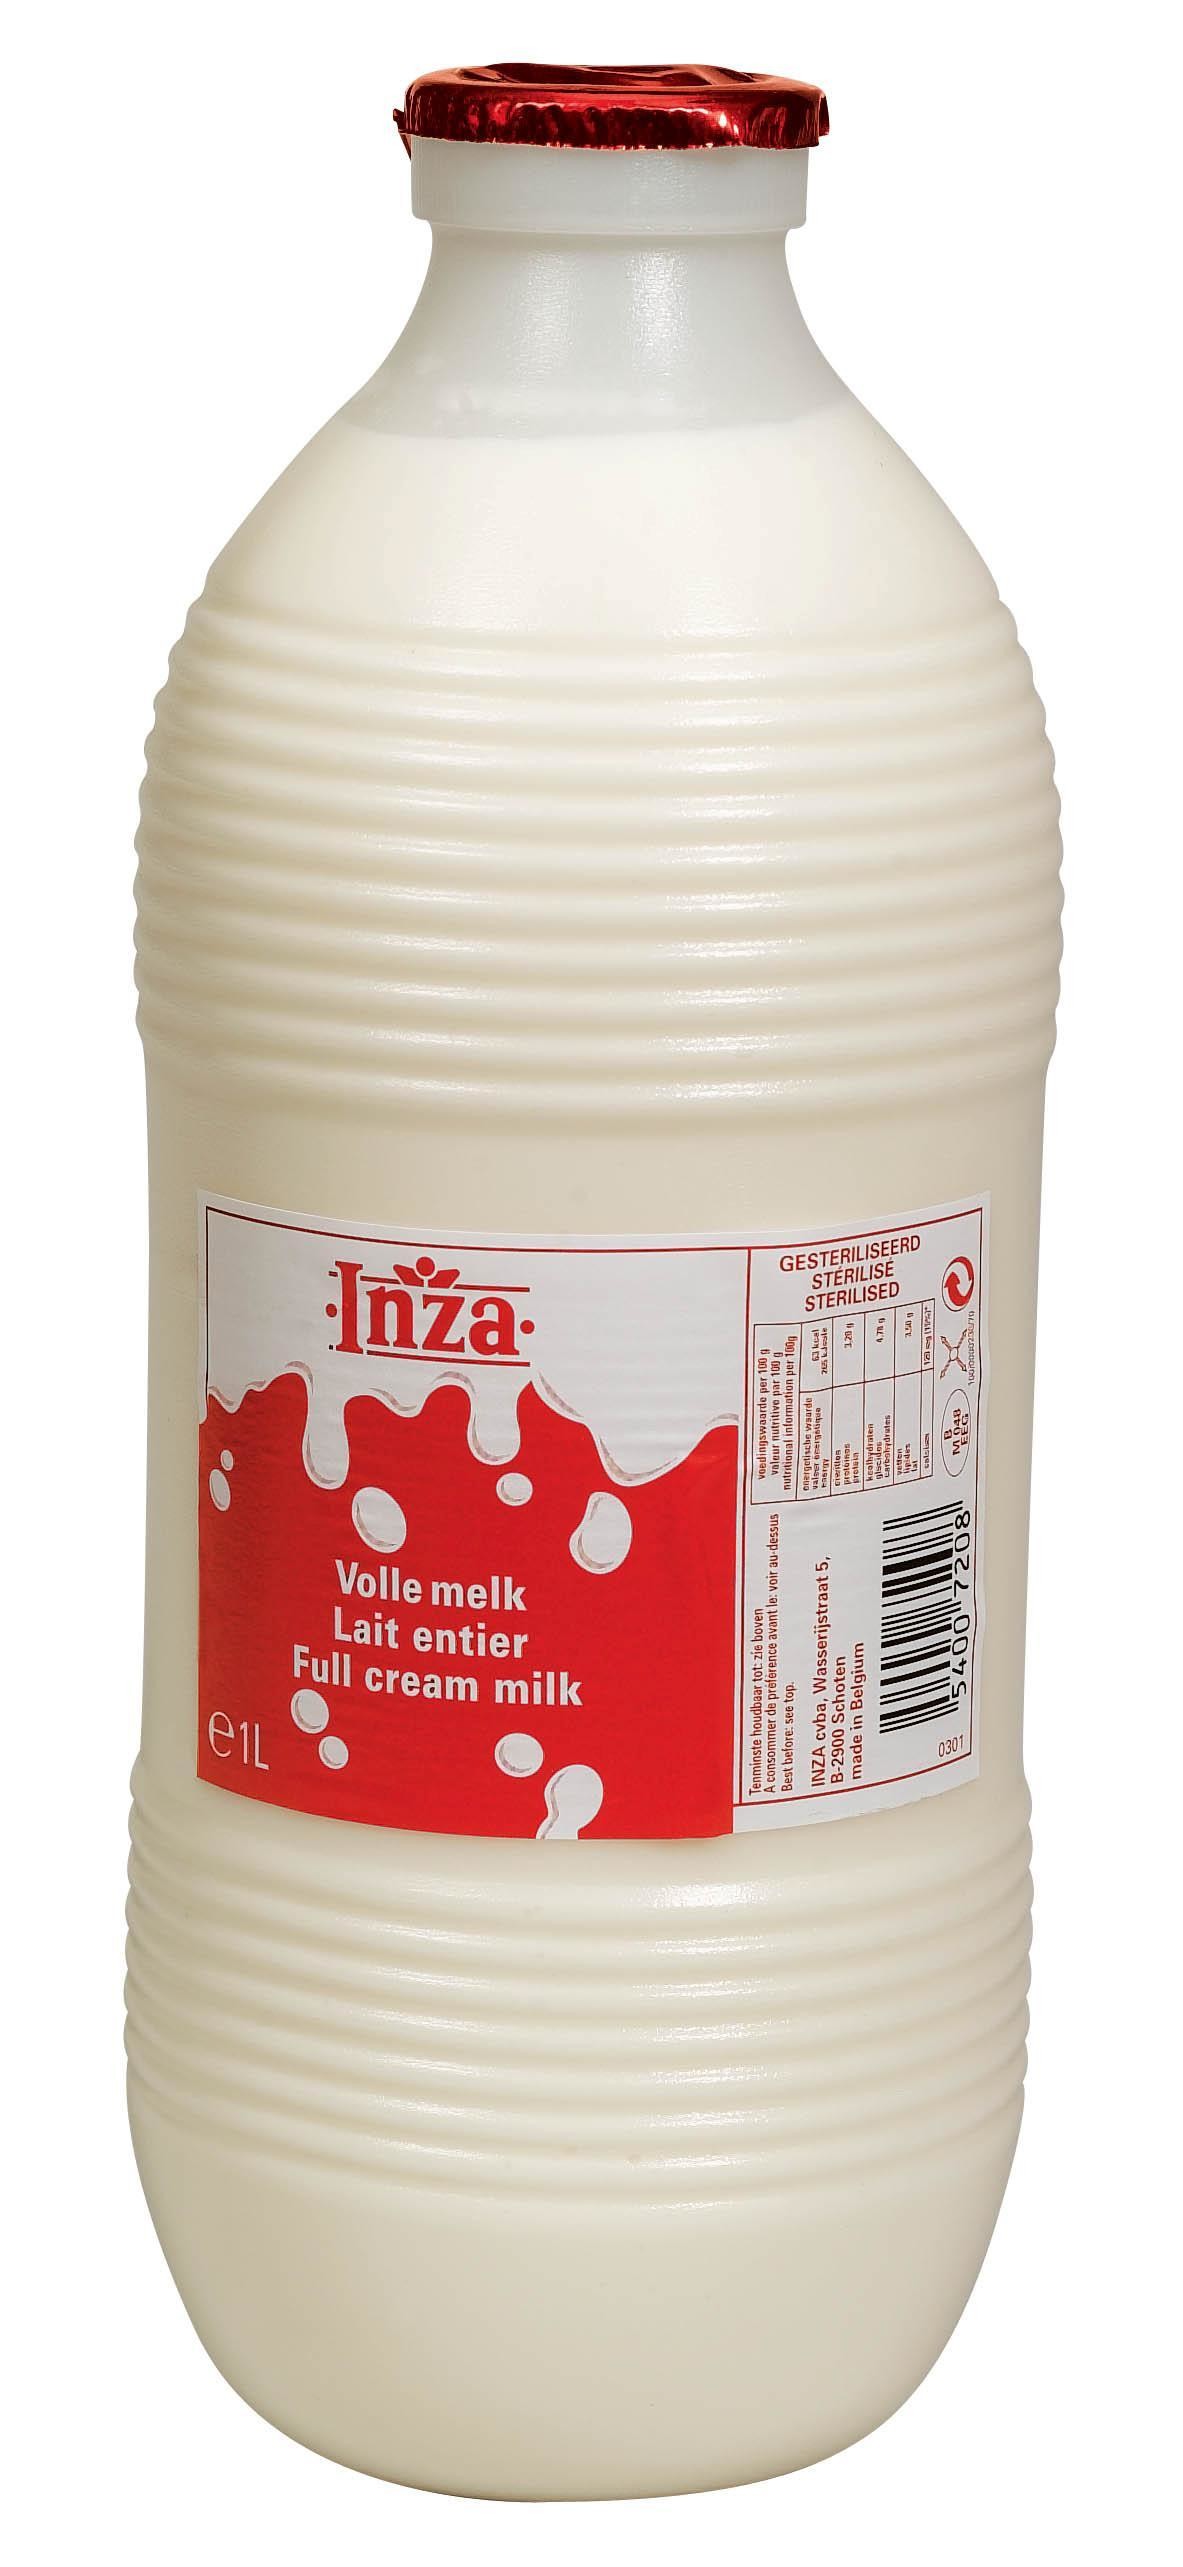 Inza volle Melk gesteriliseerd 1L P.E.